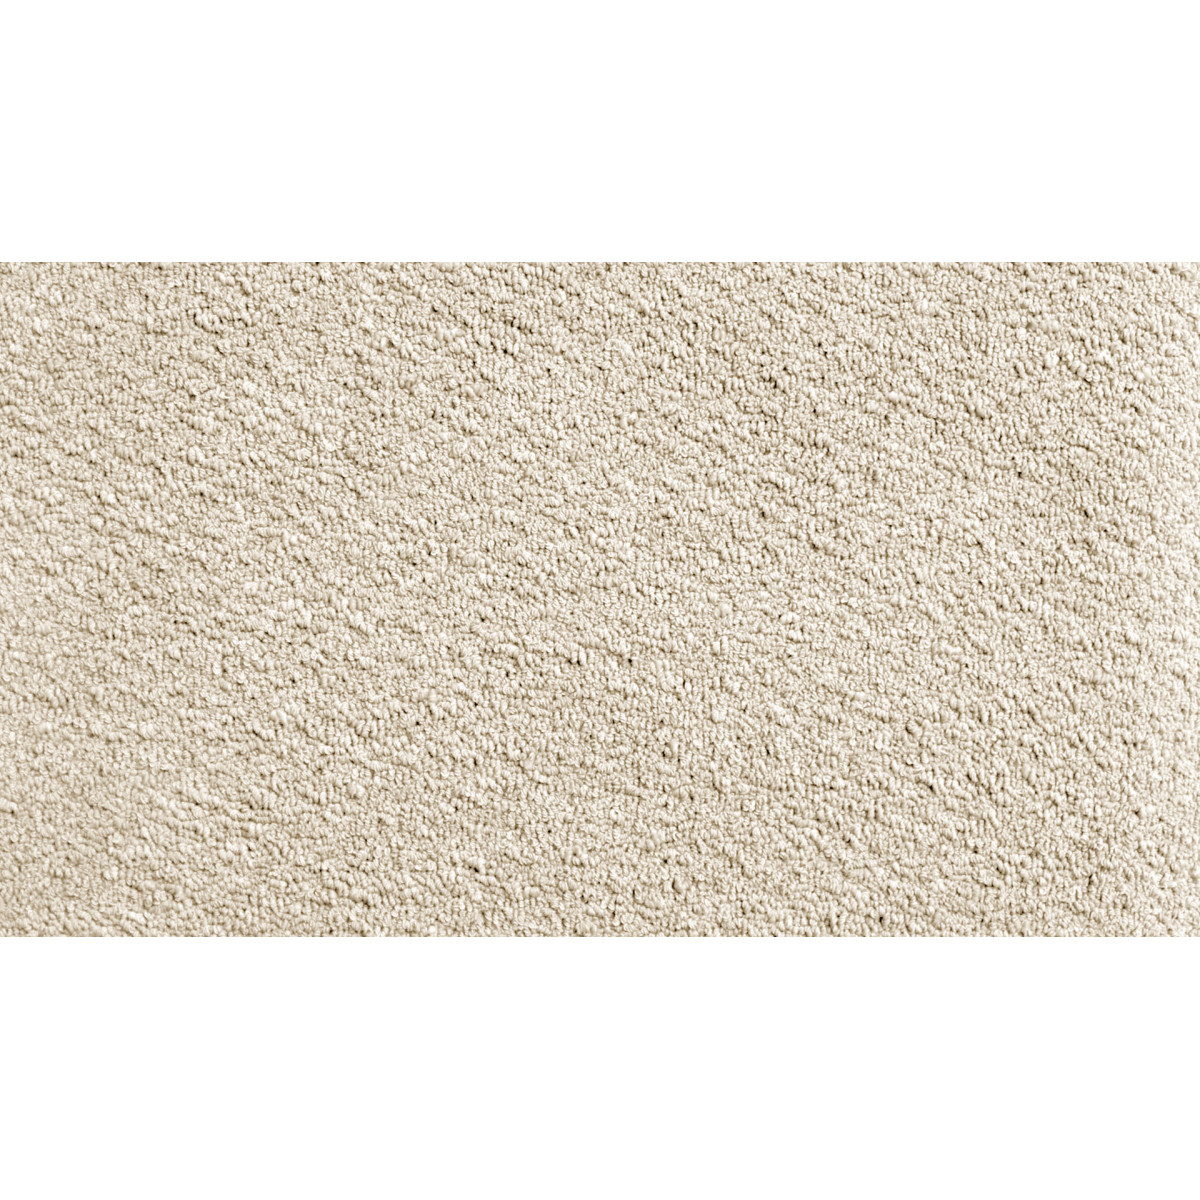 AKCE: 210x280 cm Metrážový koberec Wild Luxury - Earthy Privilege VČETNĚ OBŠITÍ